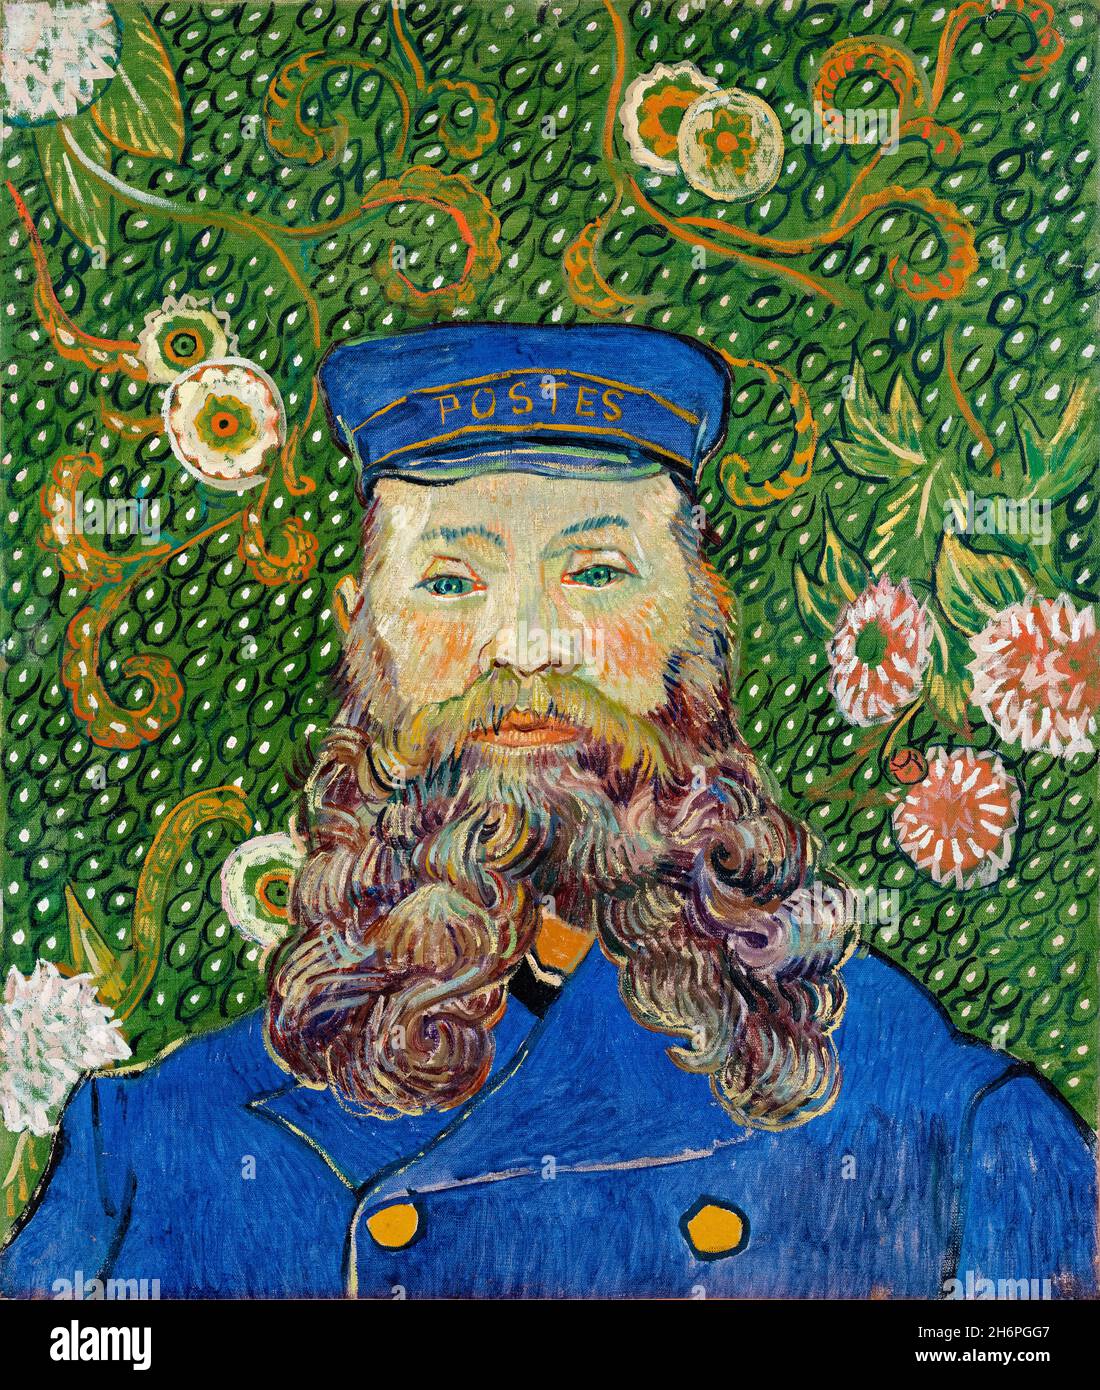 Van Gogh, el cartero Joseph Roulin. Pintura al óleo sobre lienzo por Vincent van Gogh, 1889 Foto de stock